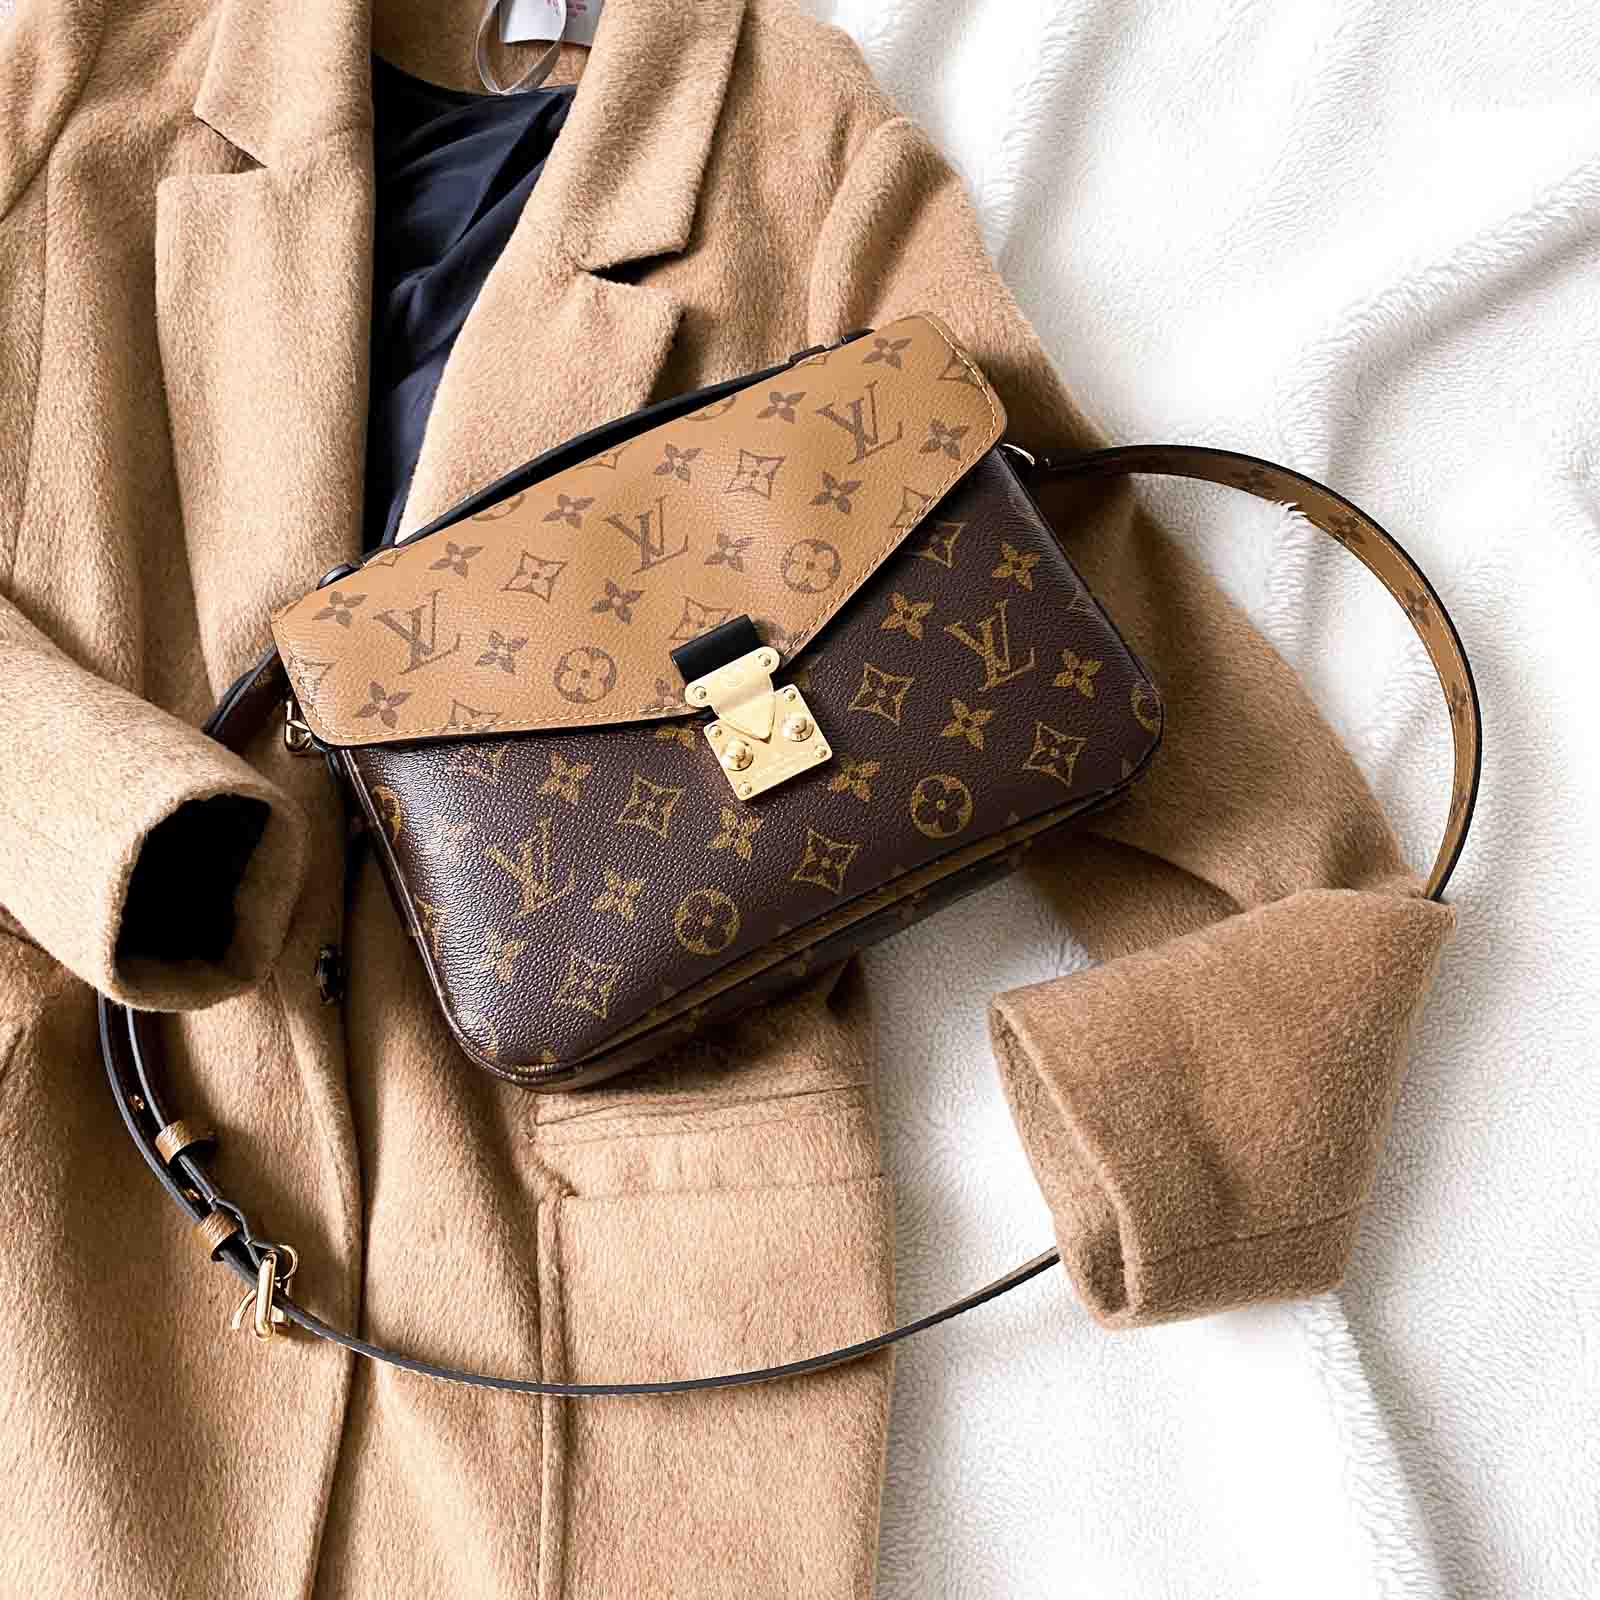 13 Best Designer Crossbody Bags with Video - Handbagholic